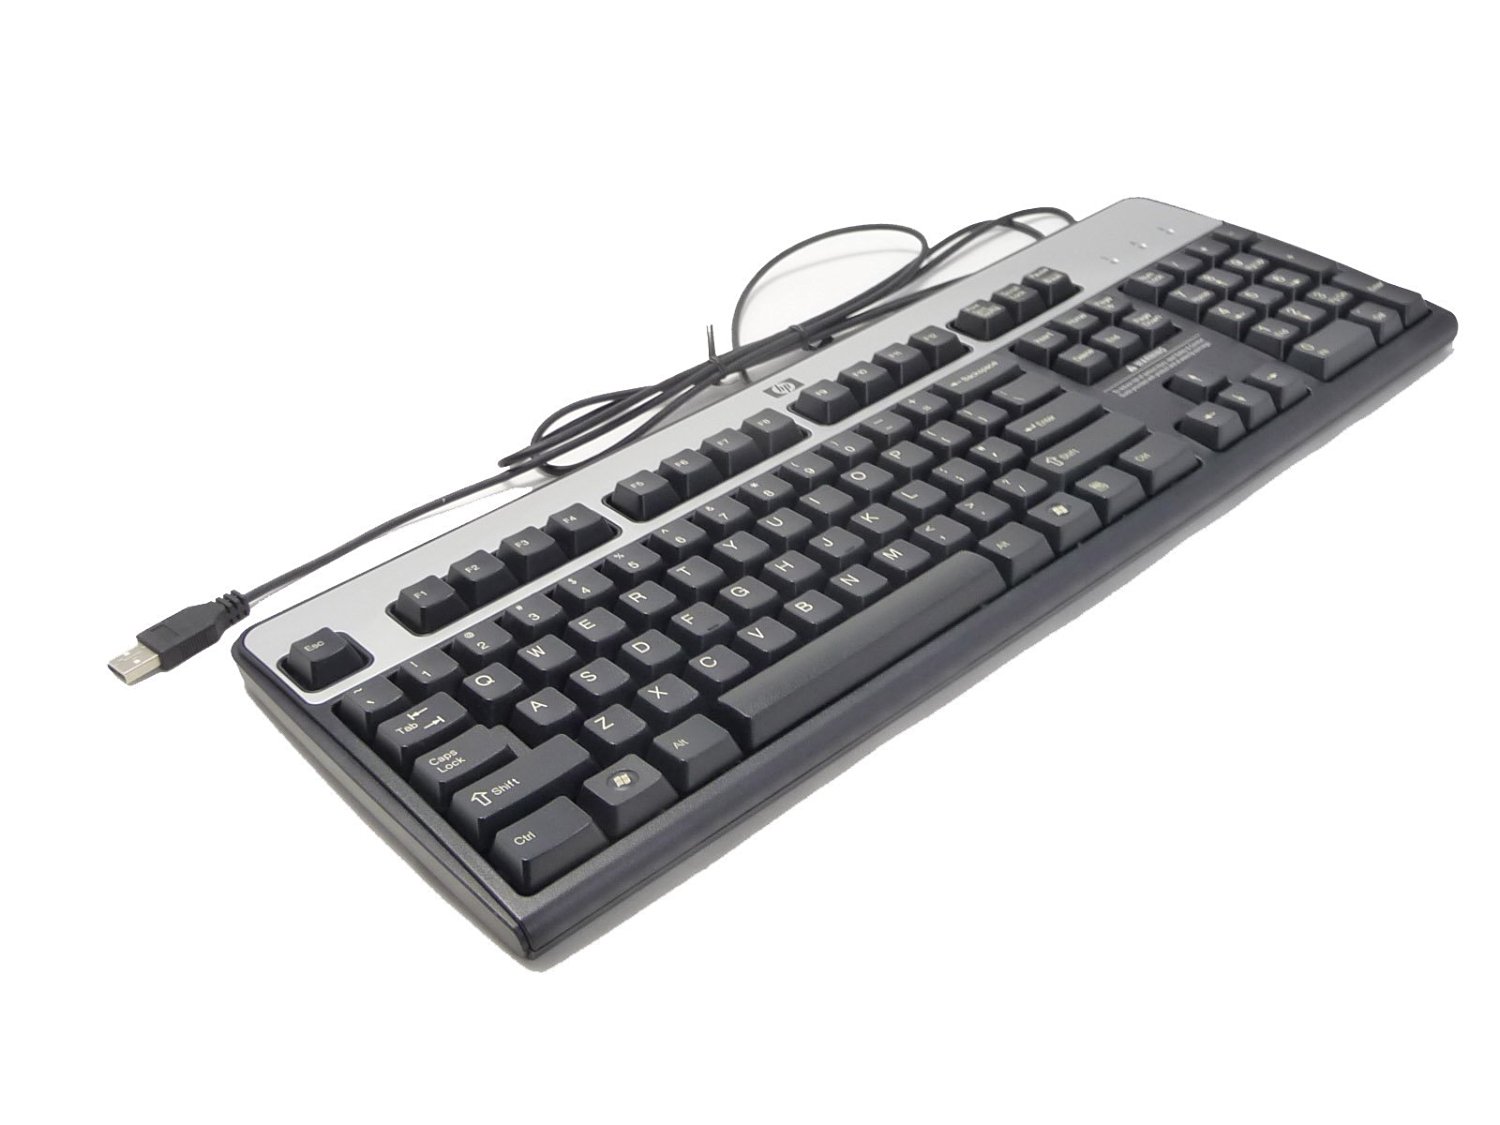 HP SK-2875 / SK-2885 / 310726-001 / 326227-001 / SK-2880 / KB0316 Keyboard Cover